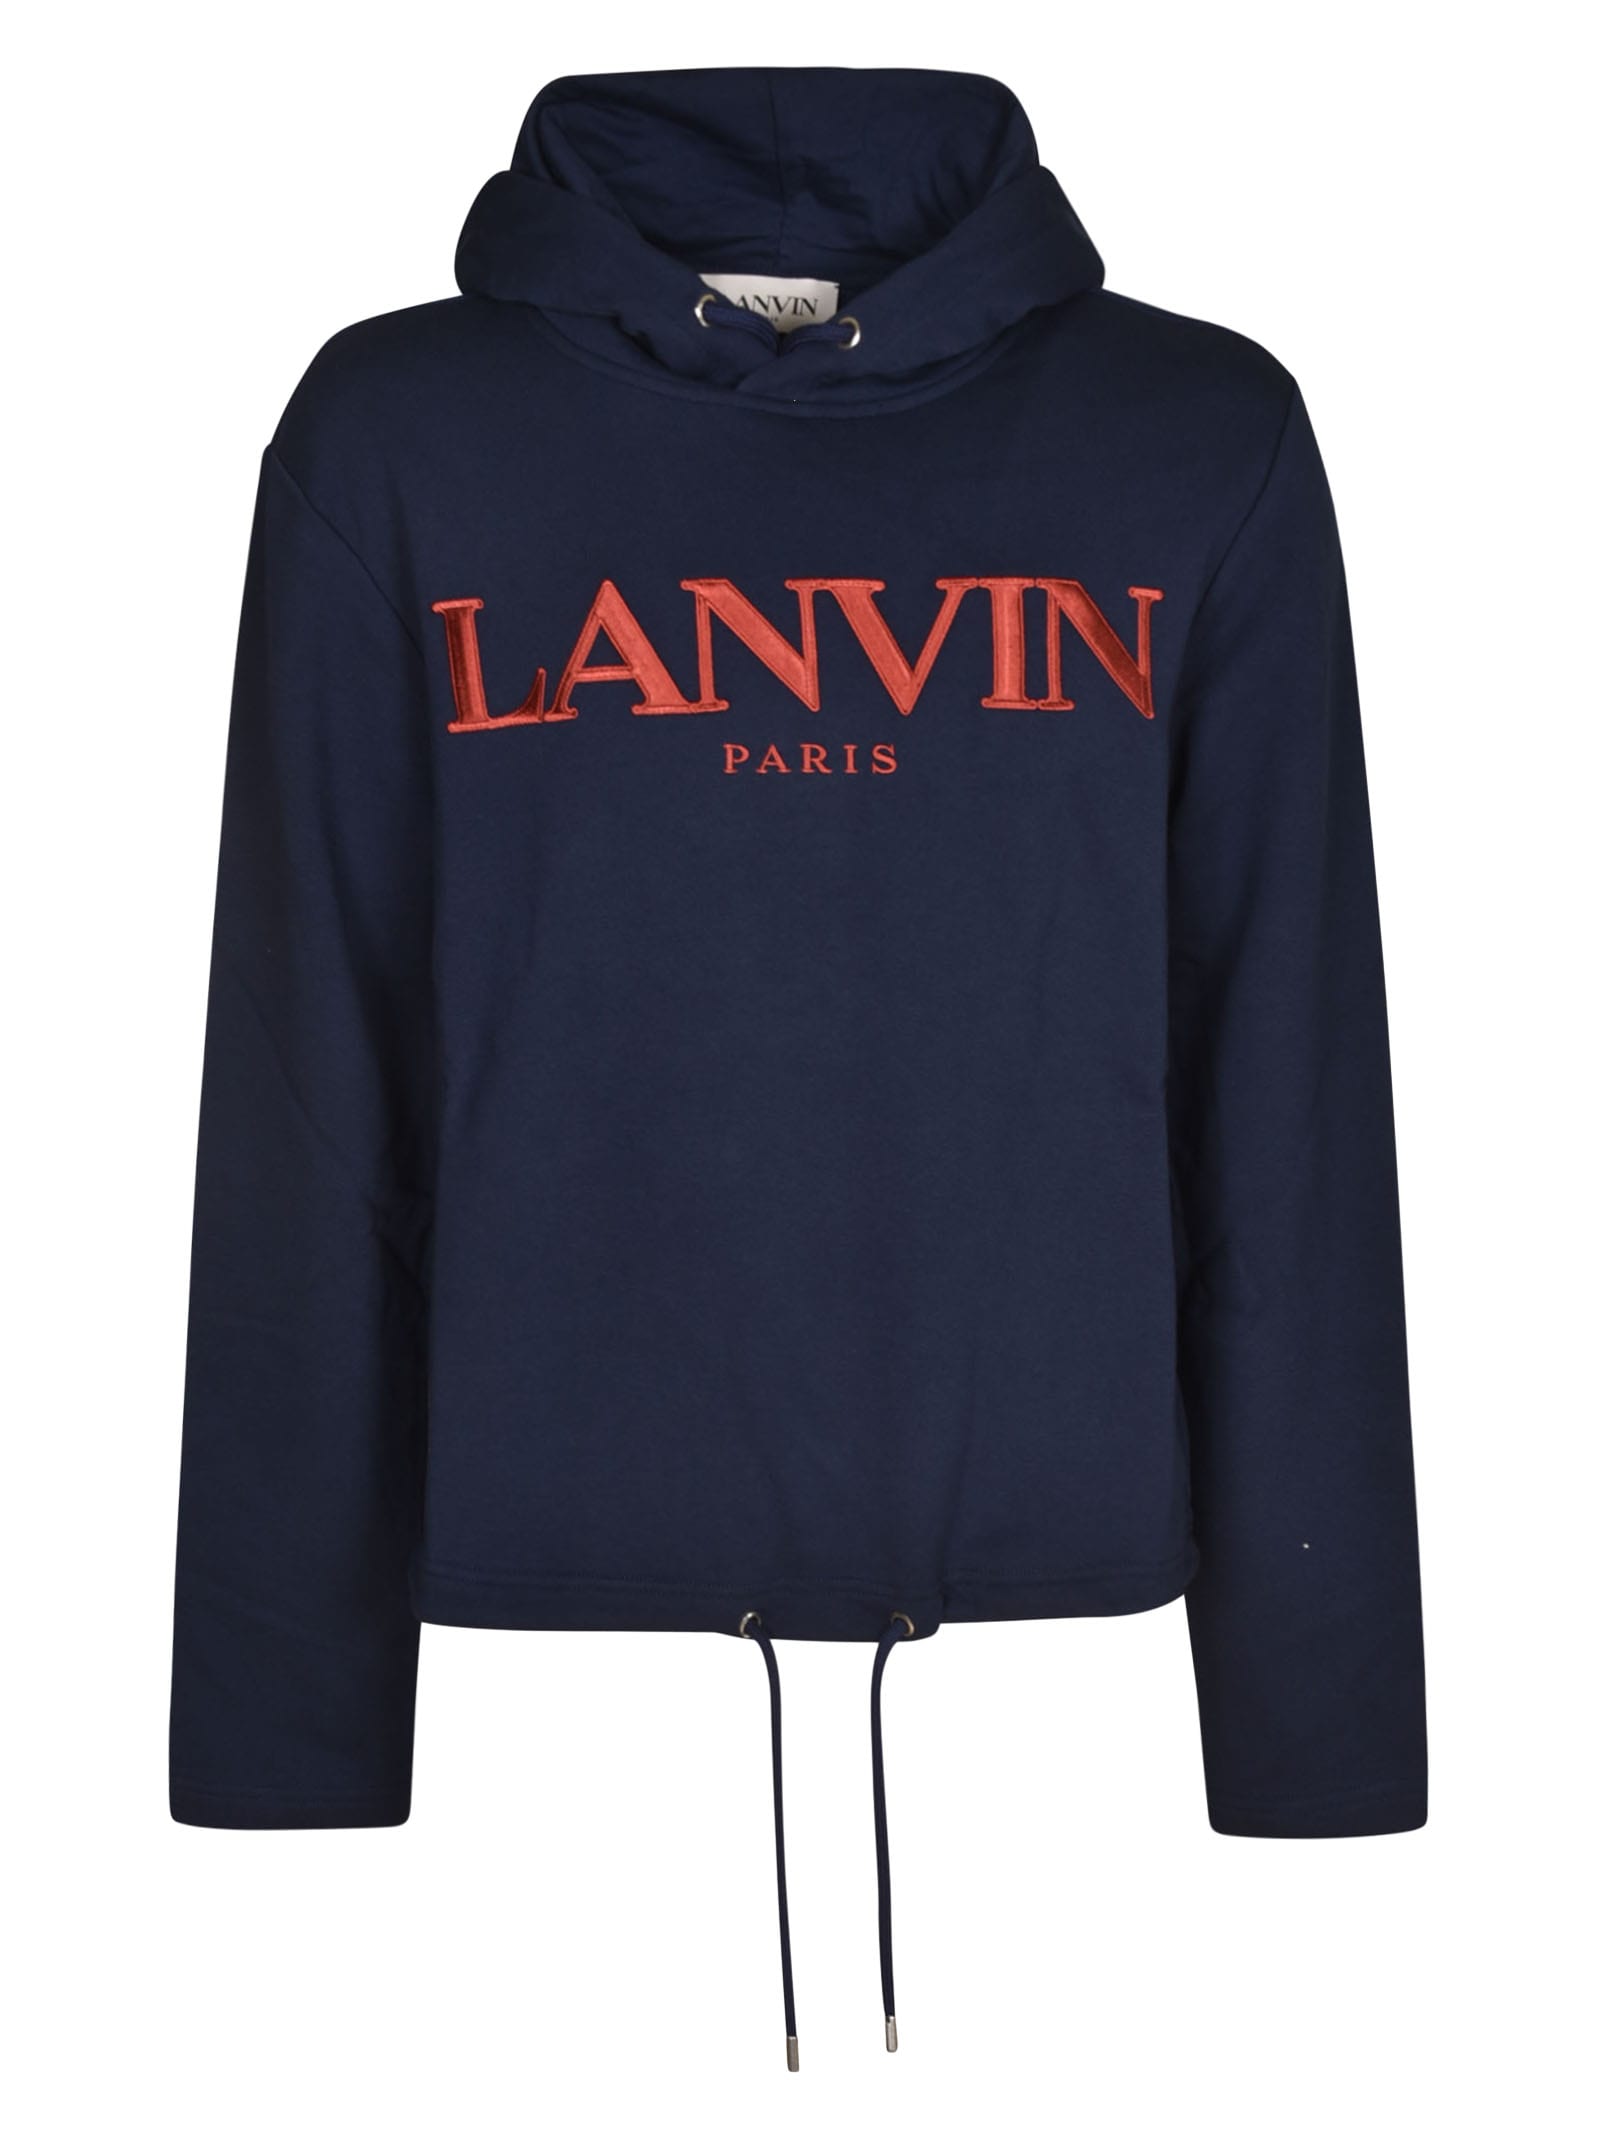 Lanvin logo embroidered drawstring hem hooded sweatshirt